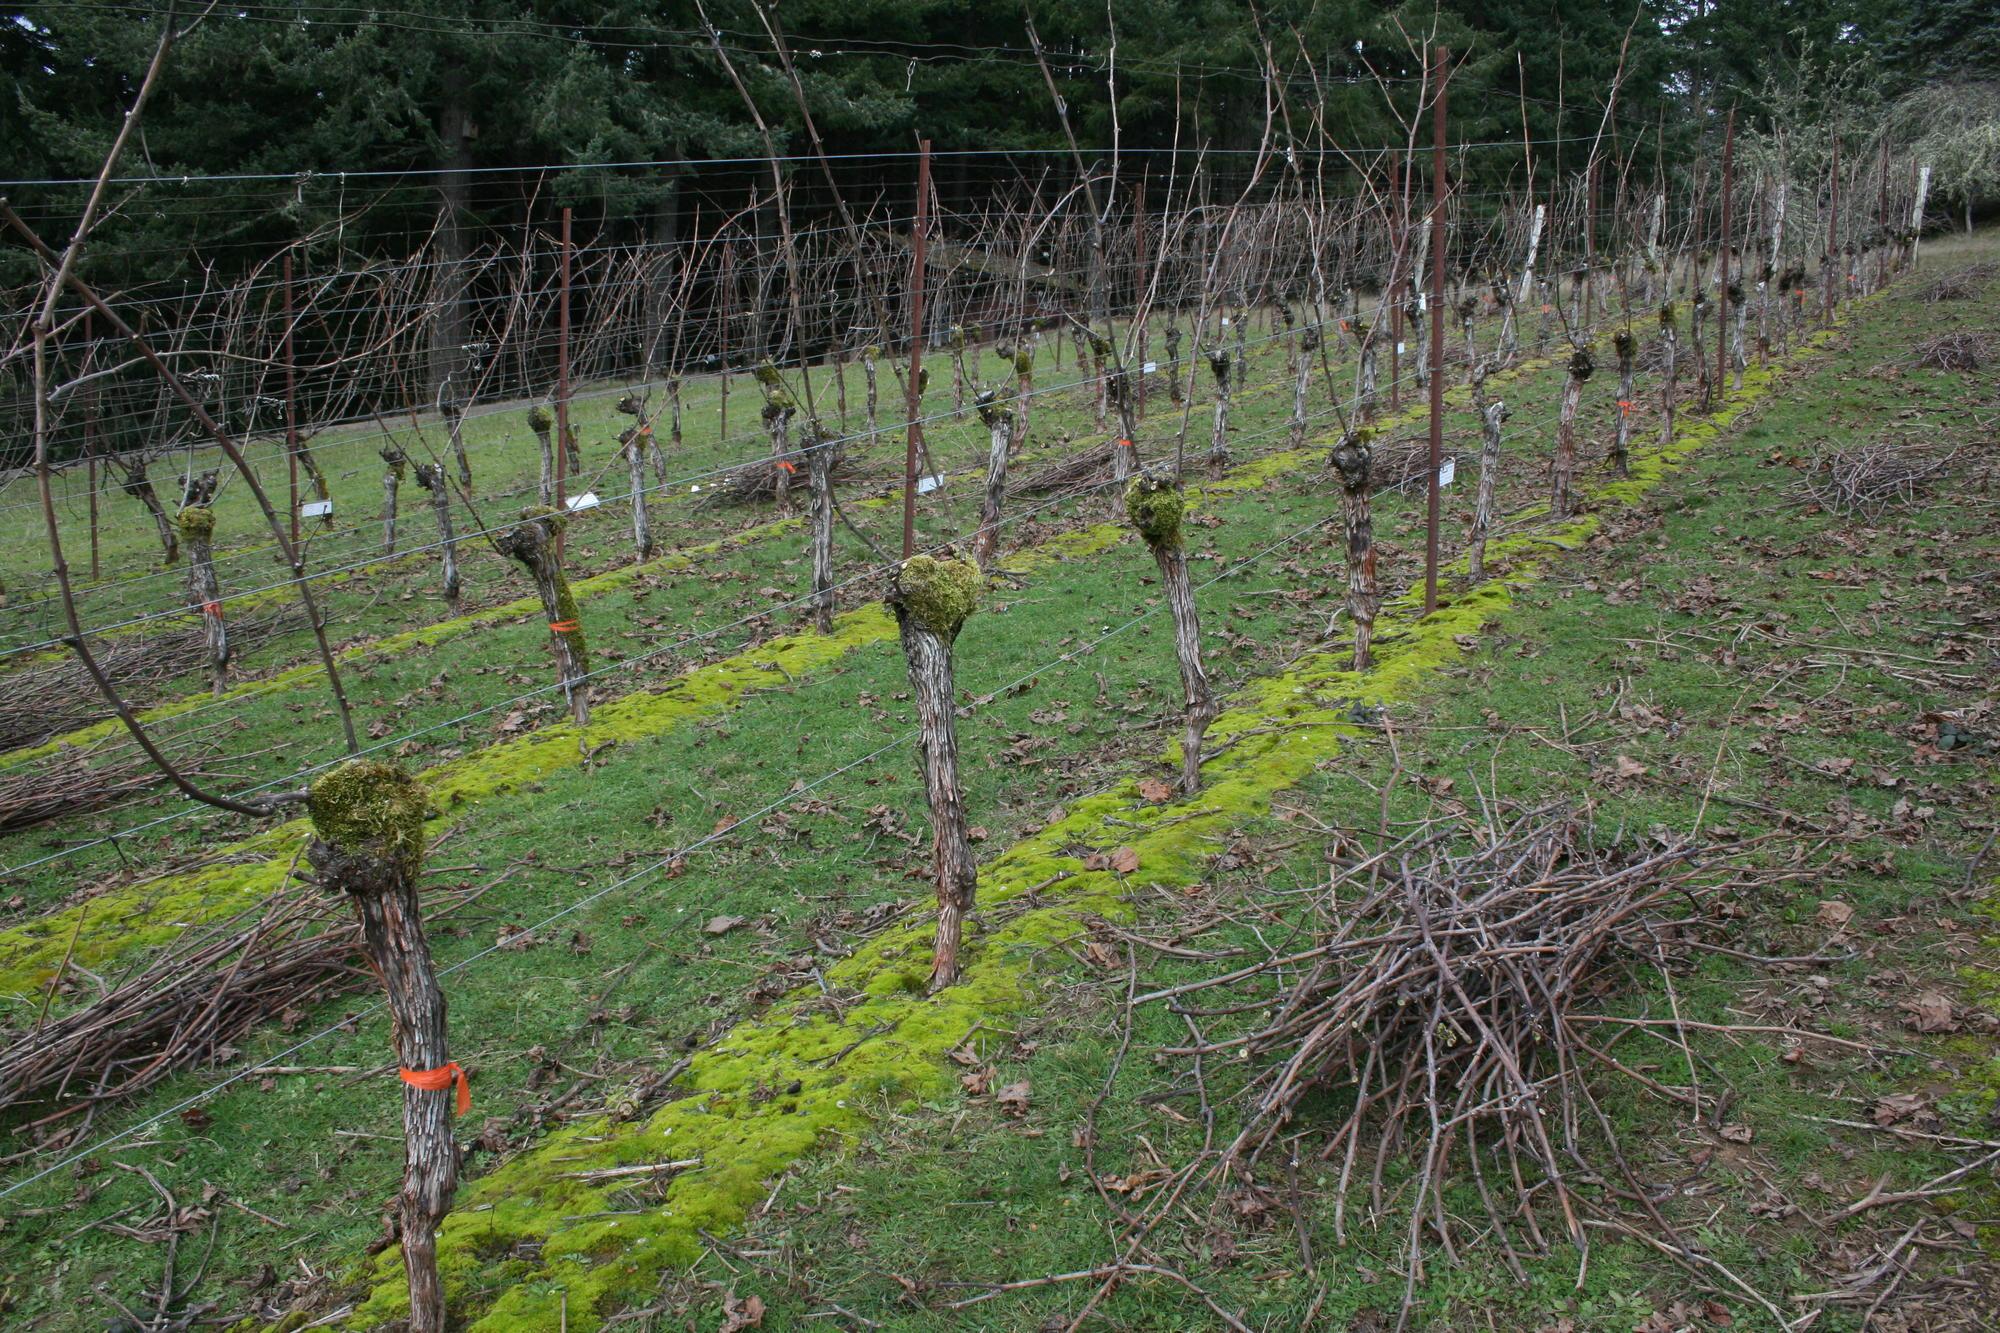 cane pruned grapevines with bundled pruned wood on vineyard floor